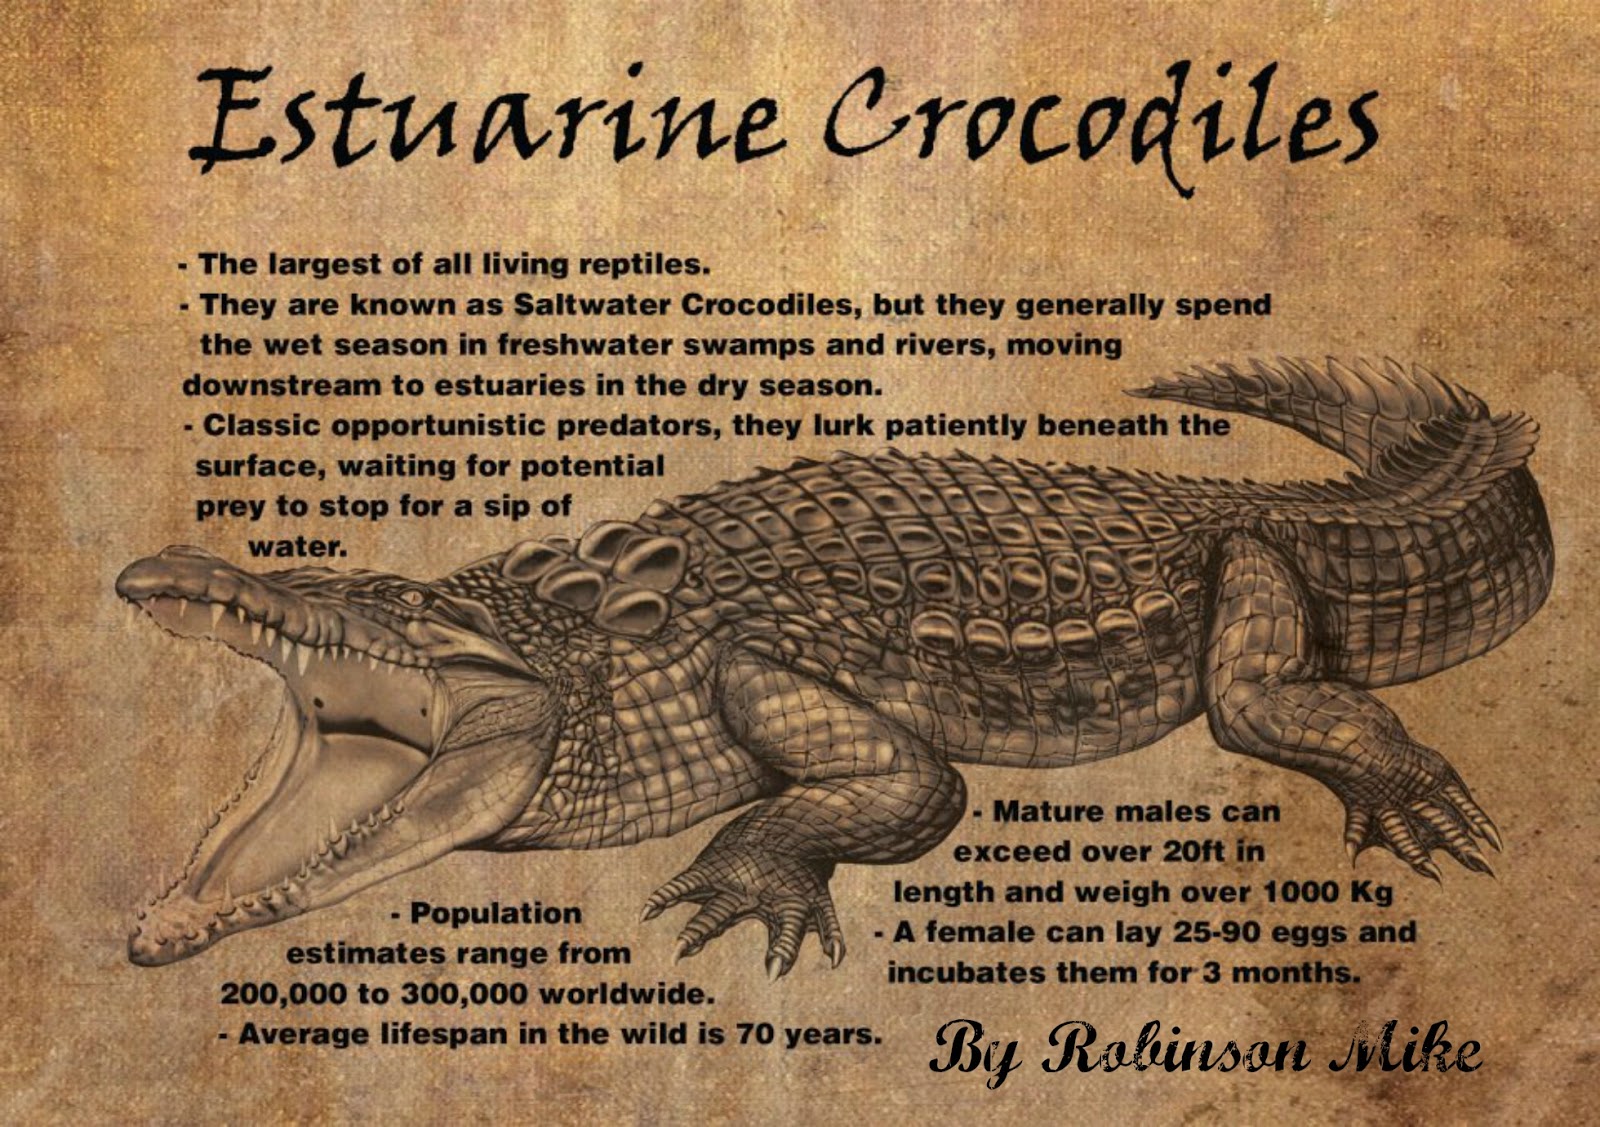 Легендарный крокодил. Афиша the Crocodiles. Английские имена для крокодилов. The Crocodile facts for Kids.